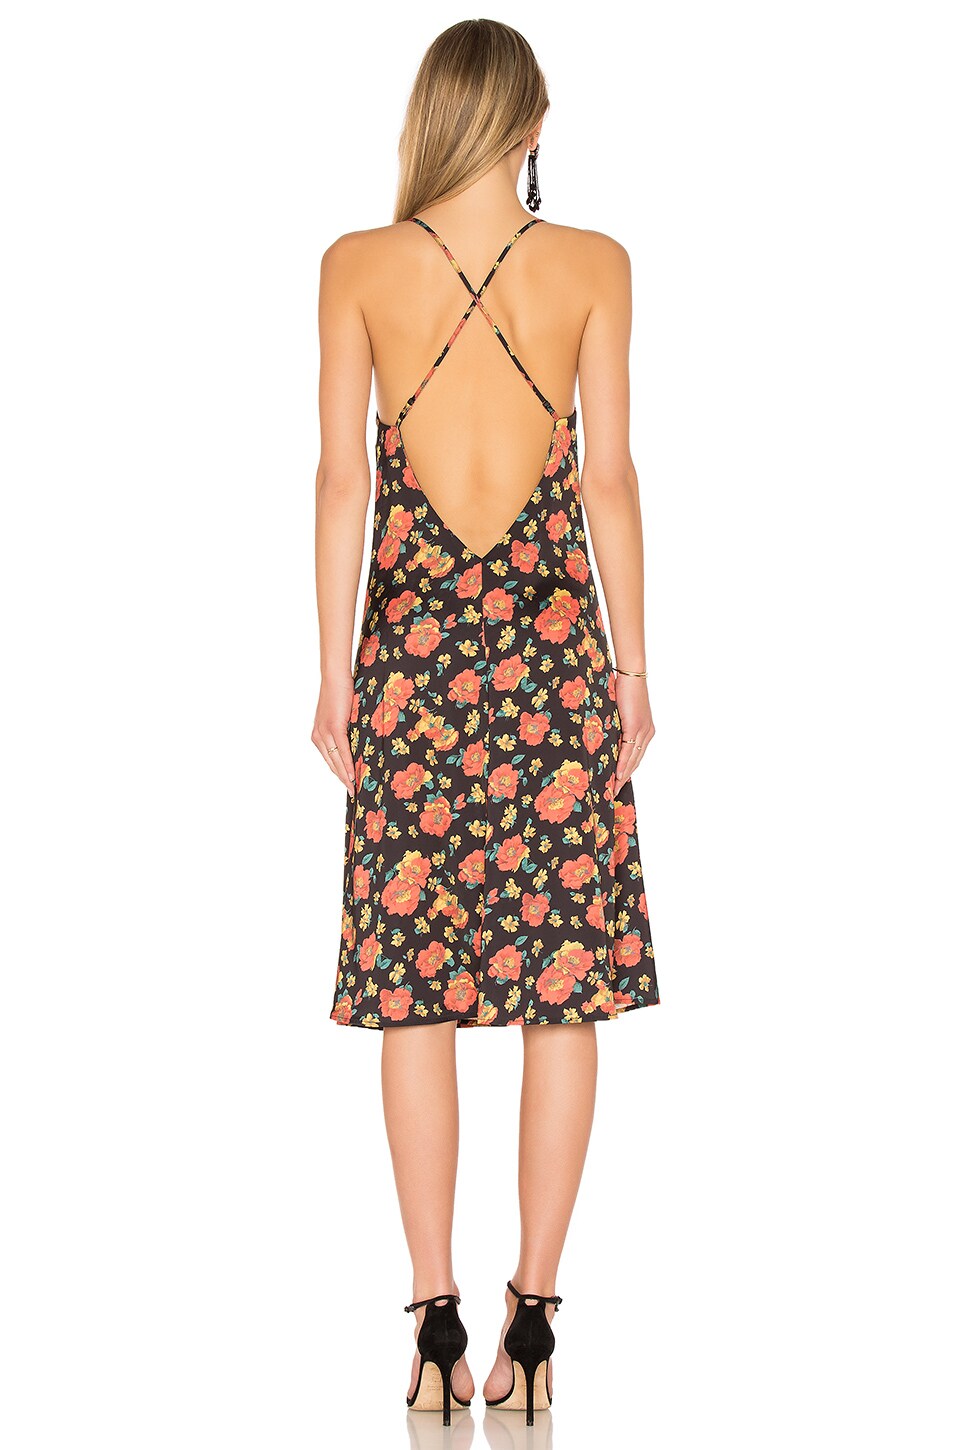 LPA Button Up Slip Dress in Rose Garden - Floral Print Summer Dress